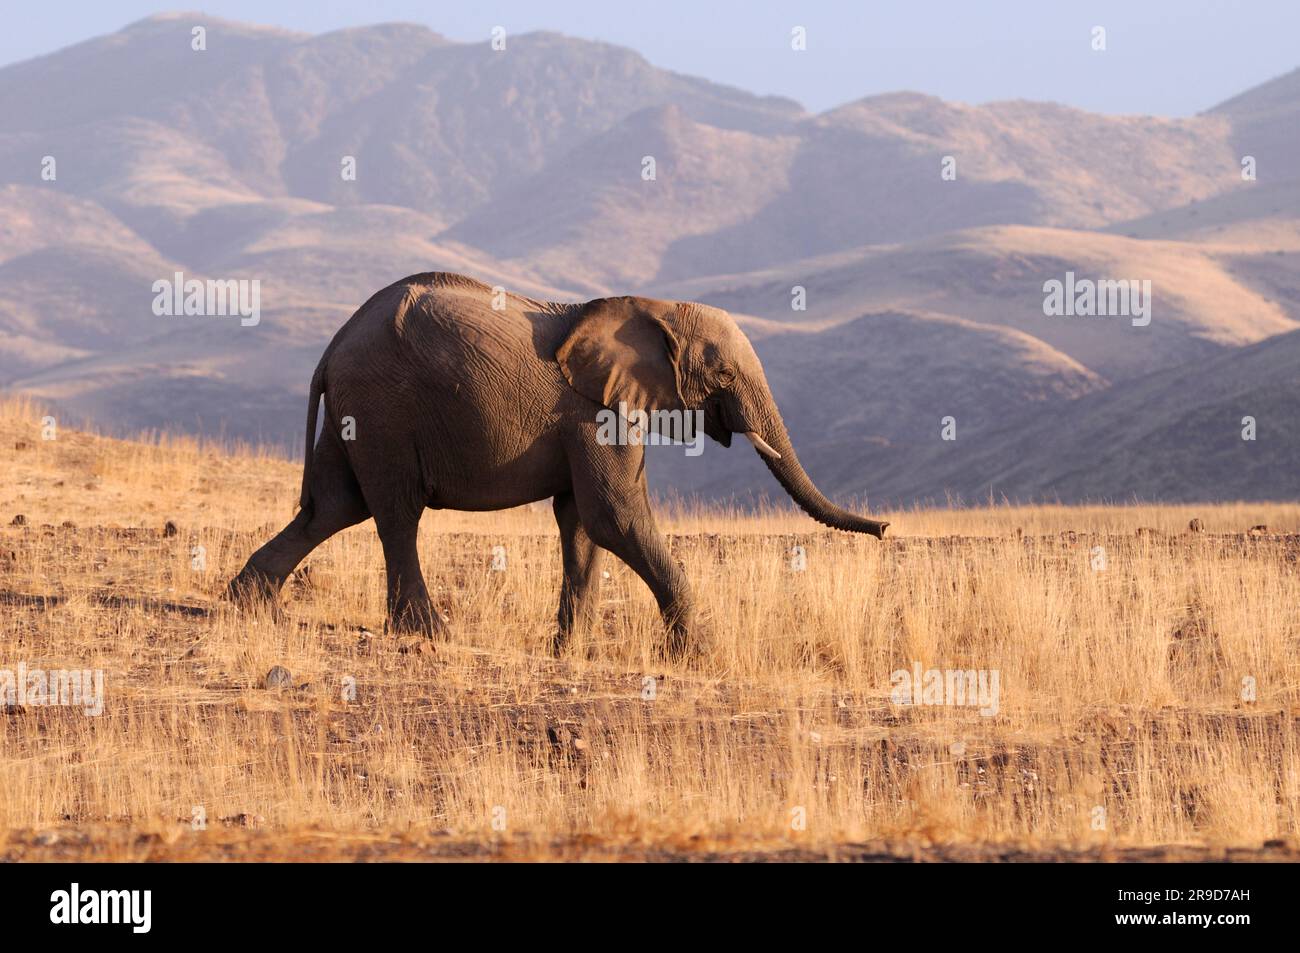 Elephant (Loxodonta africana), Okahirongo Elephant Lodge, près de Purros, Kaokoland, région de Kunene, Namibie Banque D'Images